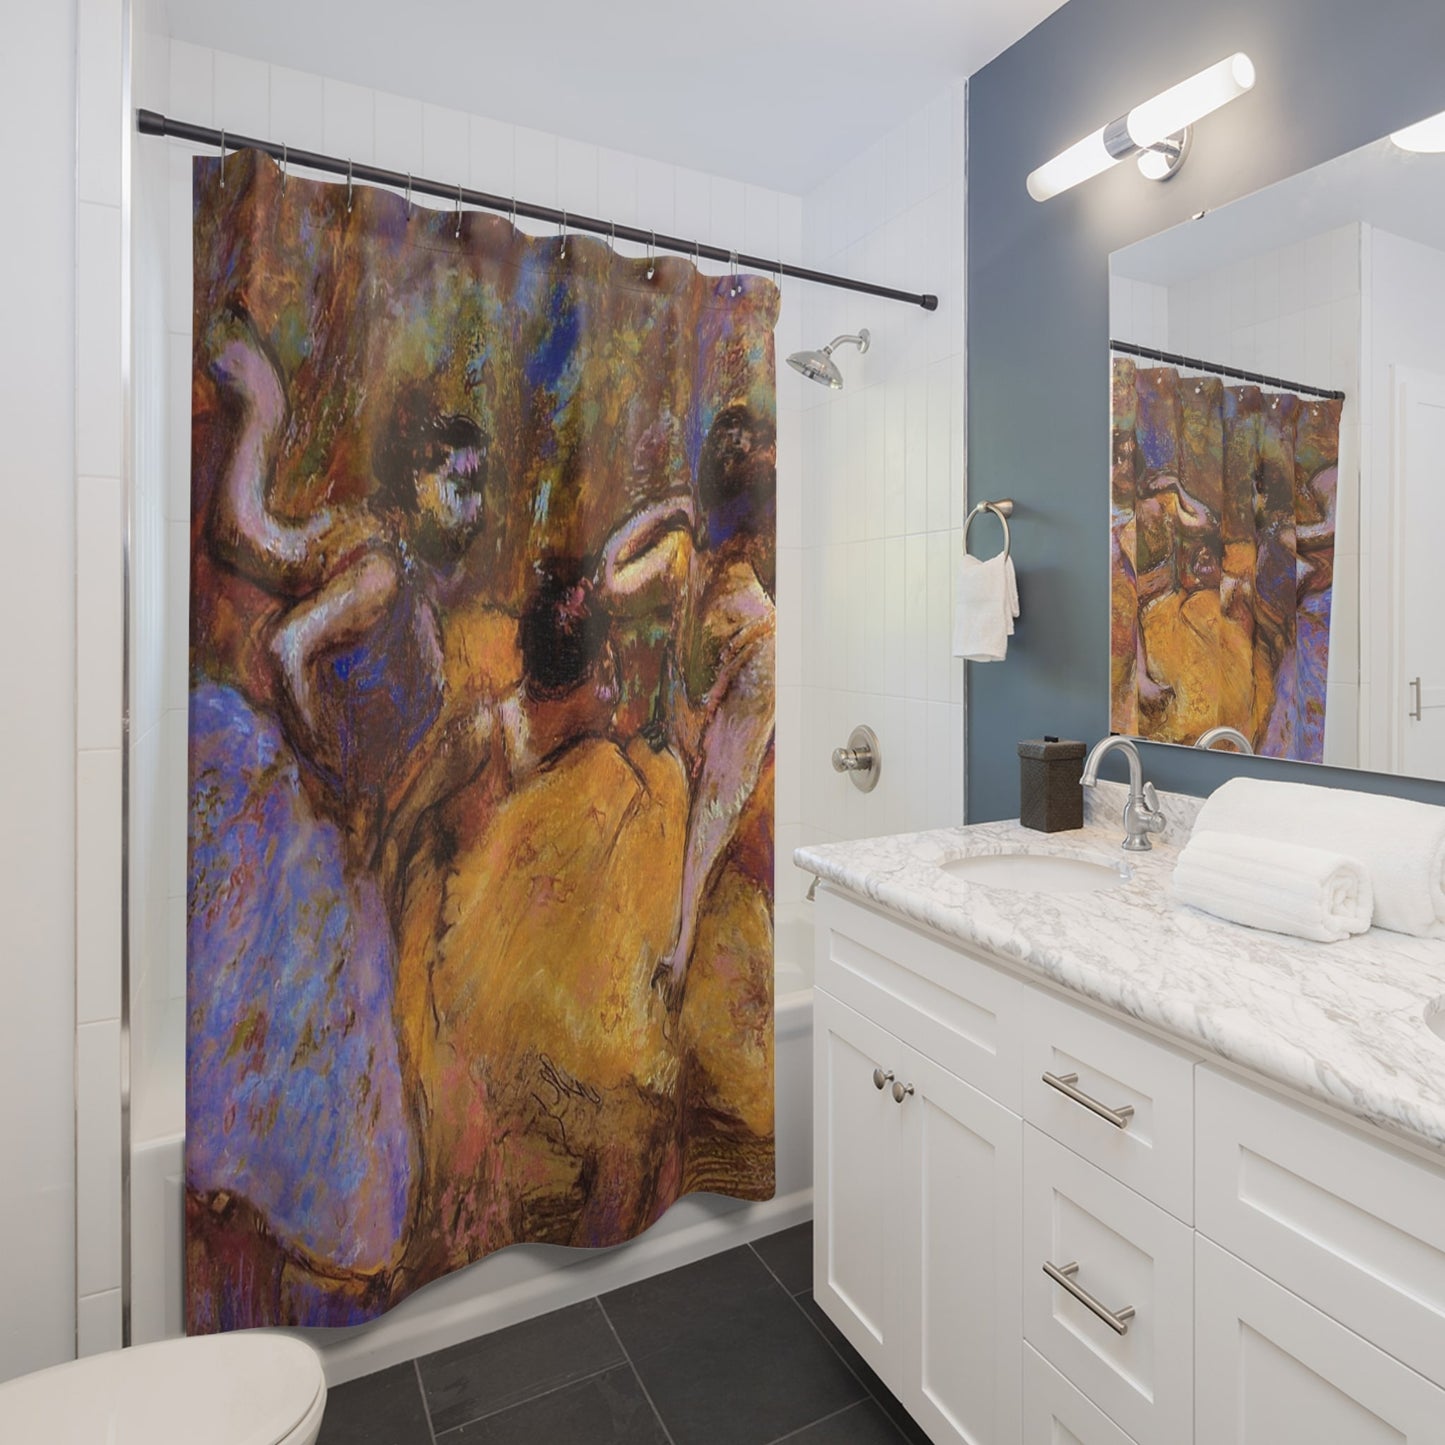 Behind the Curtain Shower Curtain Best Bathroom Decorating Ideas for Victorian Decor